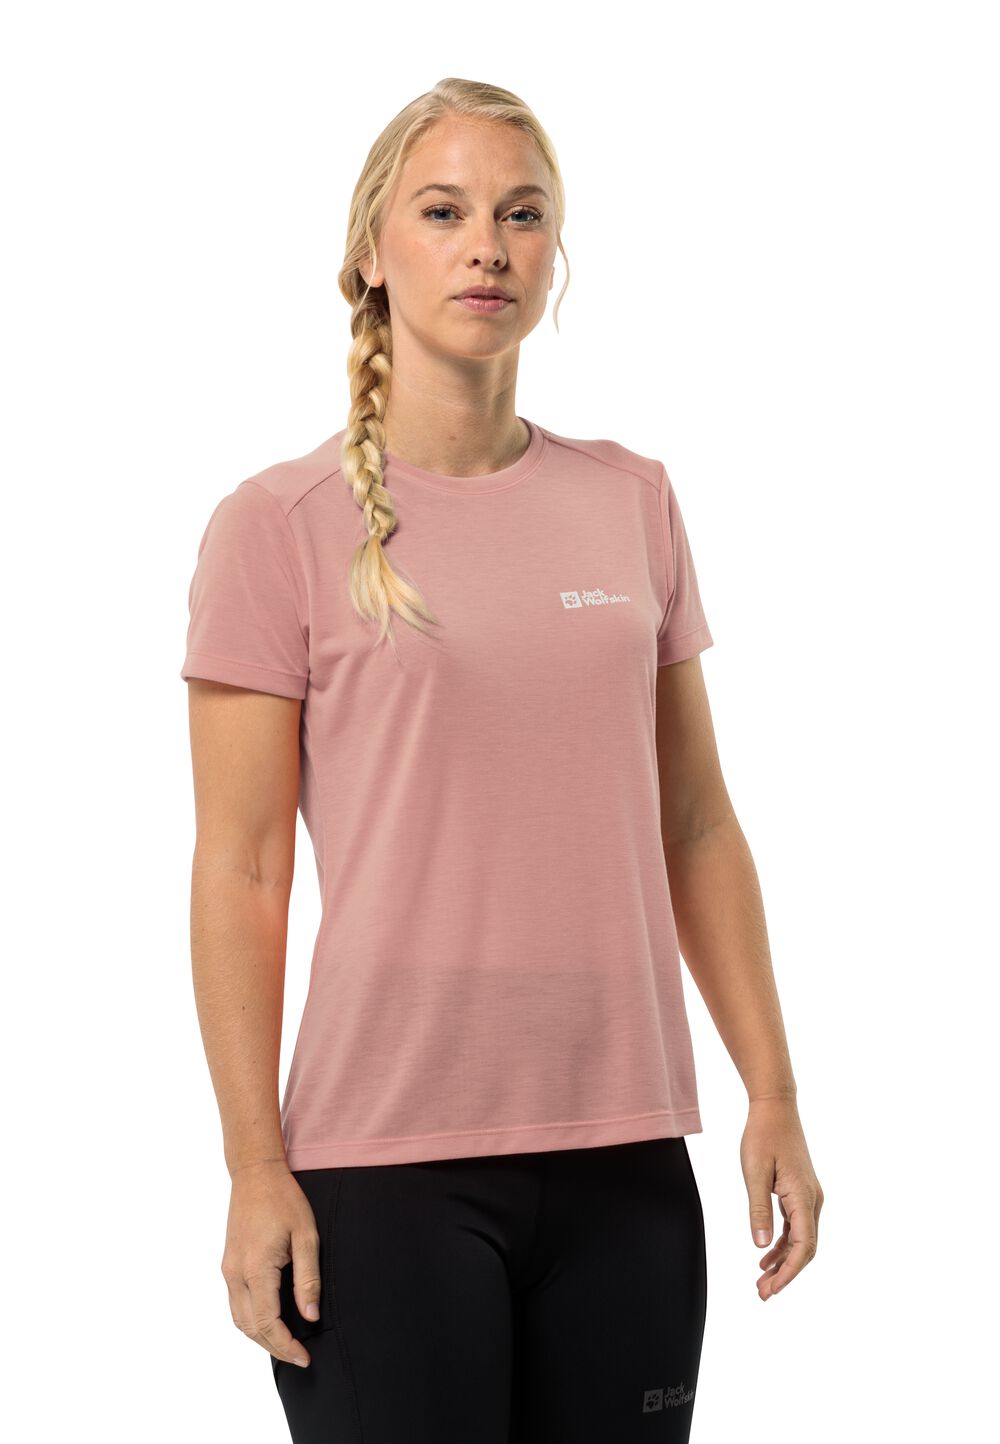 Jack Wolfskin Vonnan S S T-Shirt Women Functioneel shirt Dames L bruin rose dawn